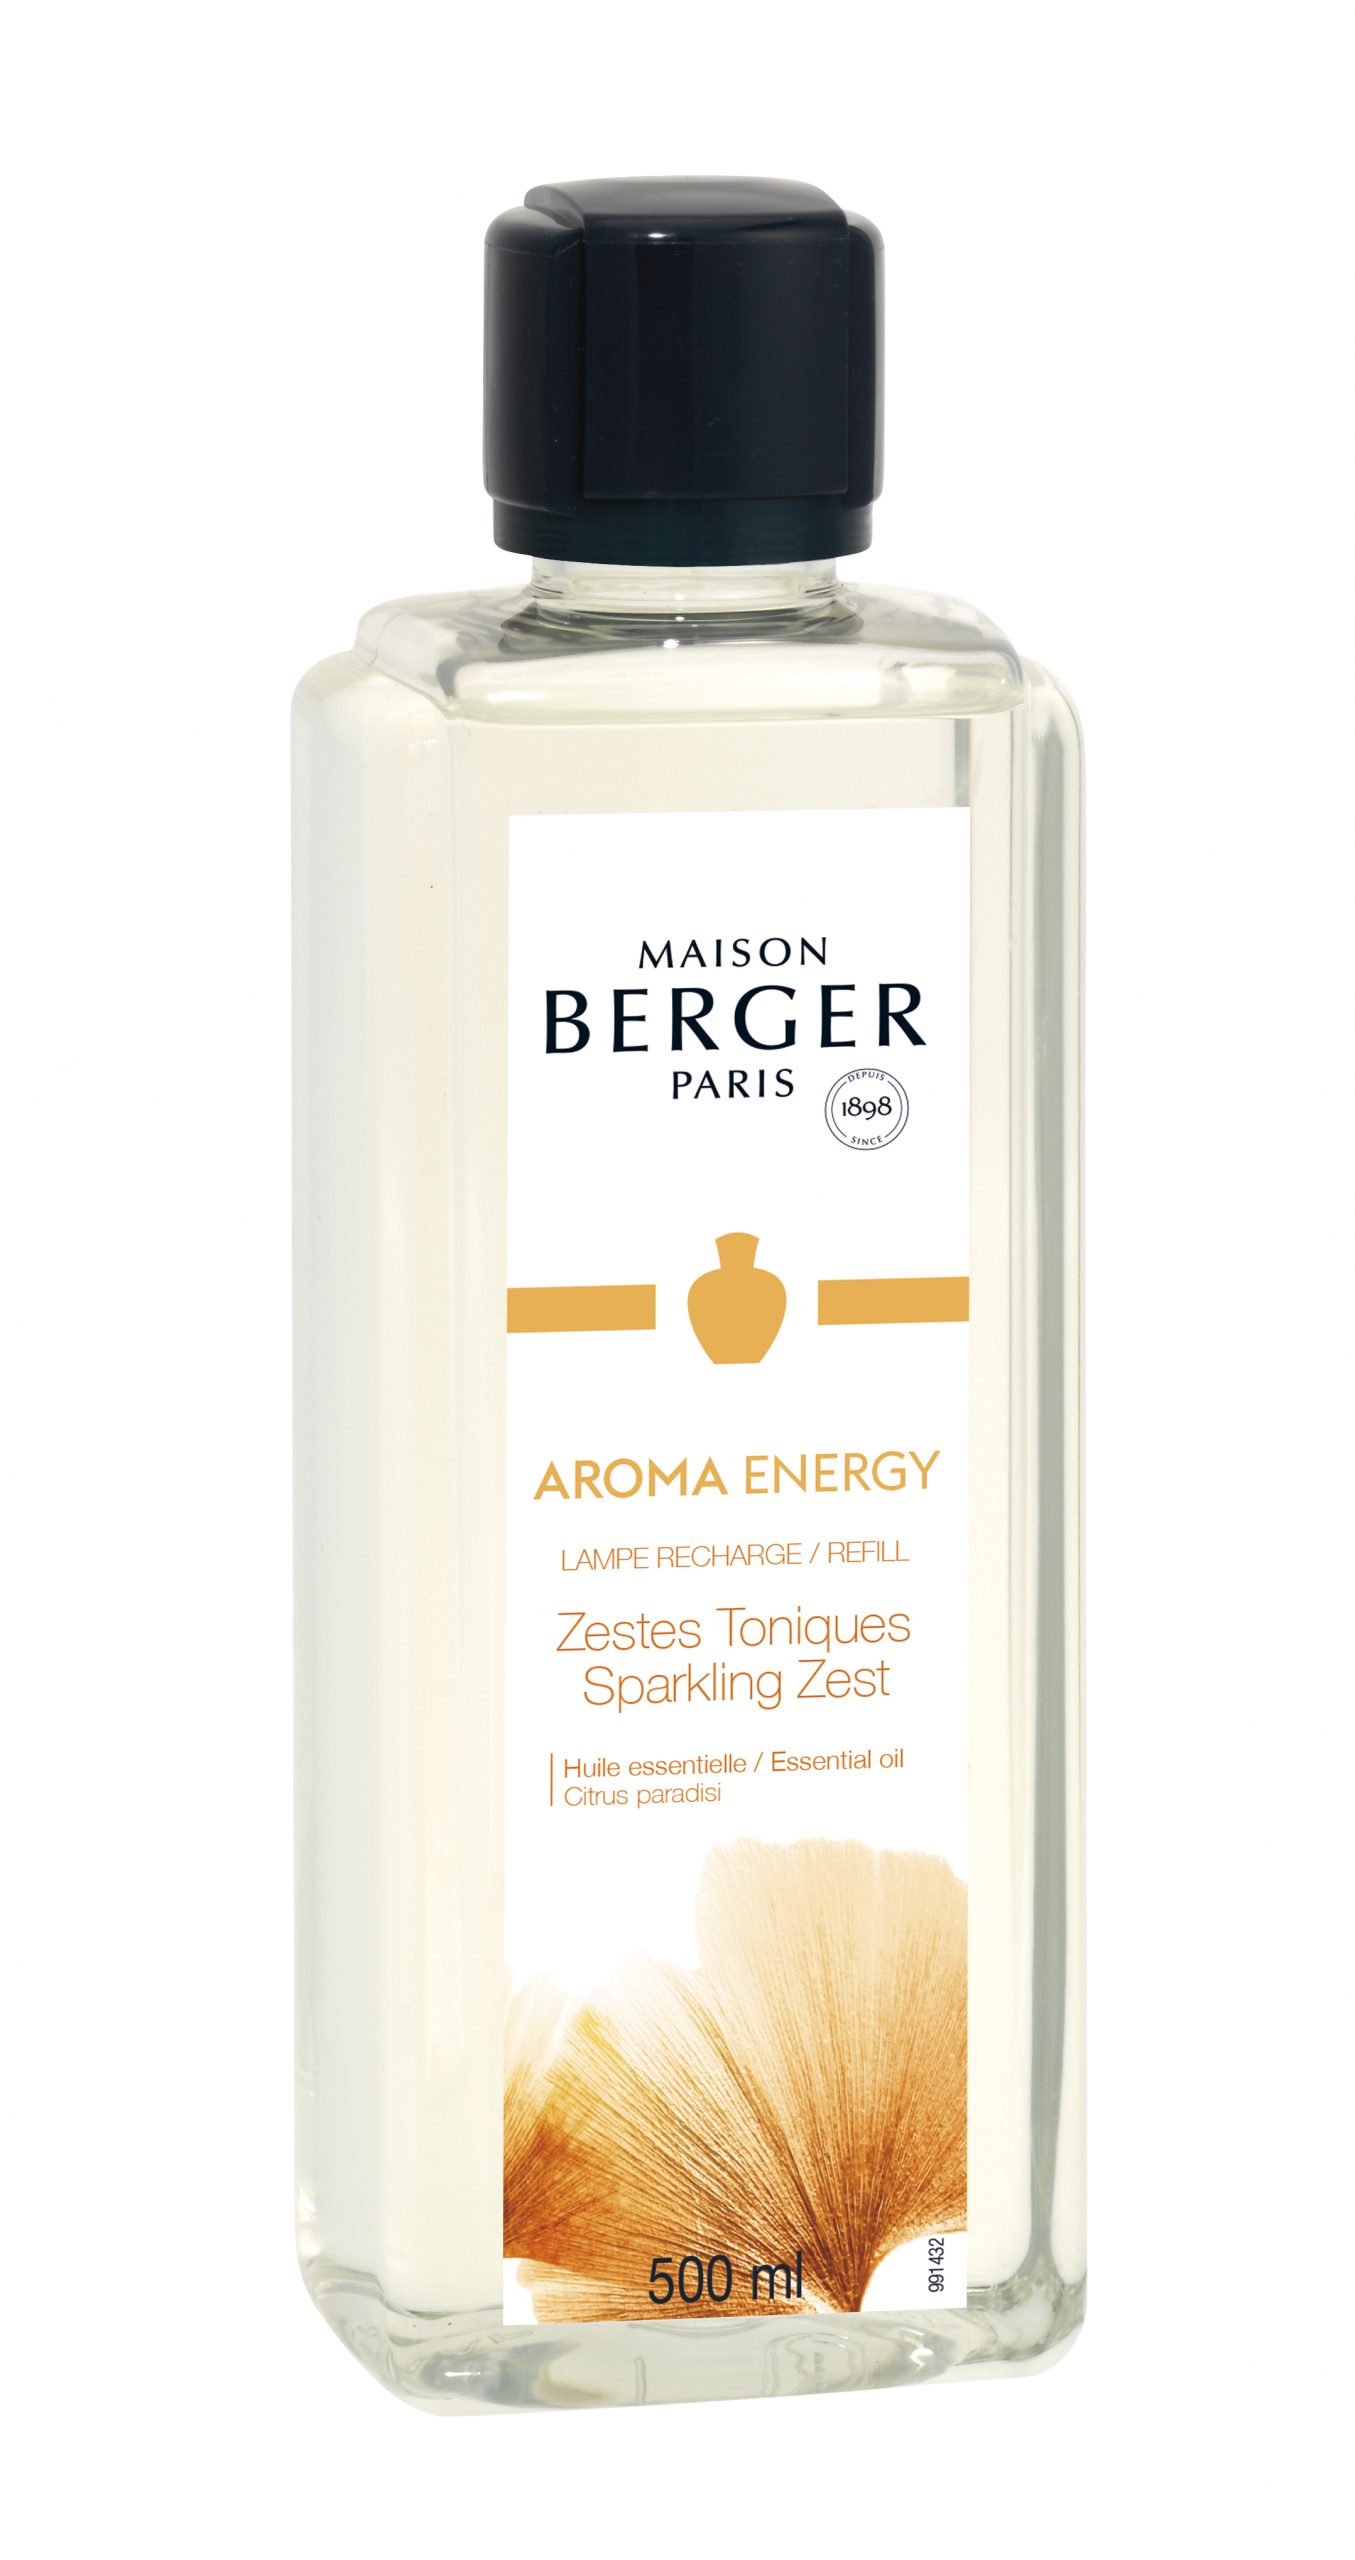 Maison Berger Paris - parfum Aroma Energy Sparkling Zest - 500 ml